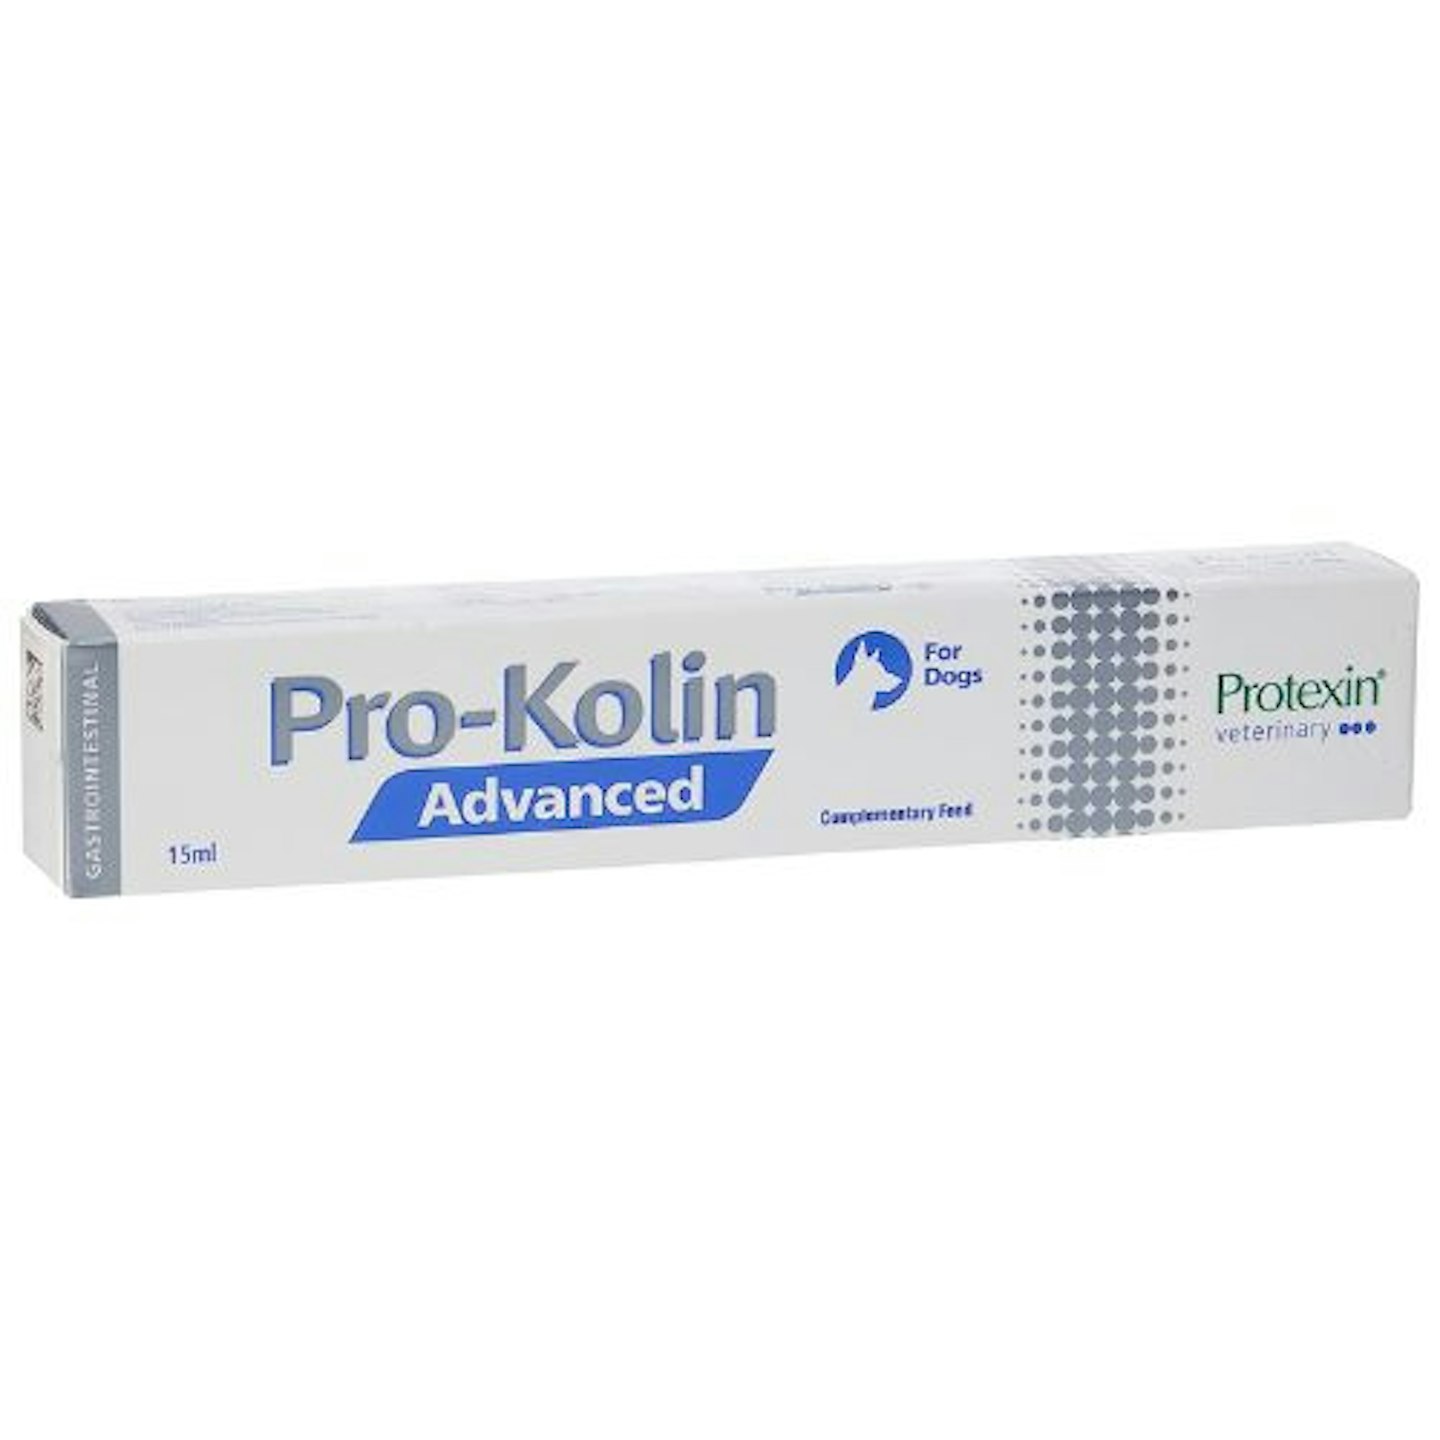 Protexin Veterinary Pro-Kolin Advanced for Dogs